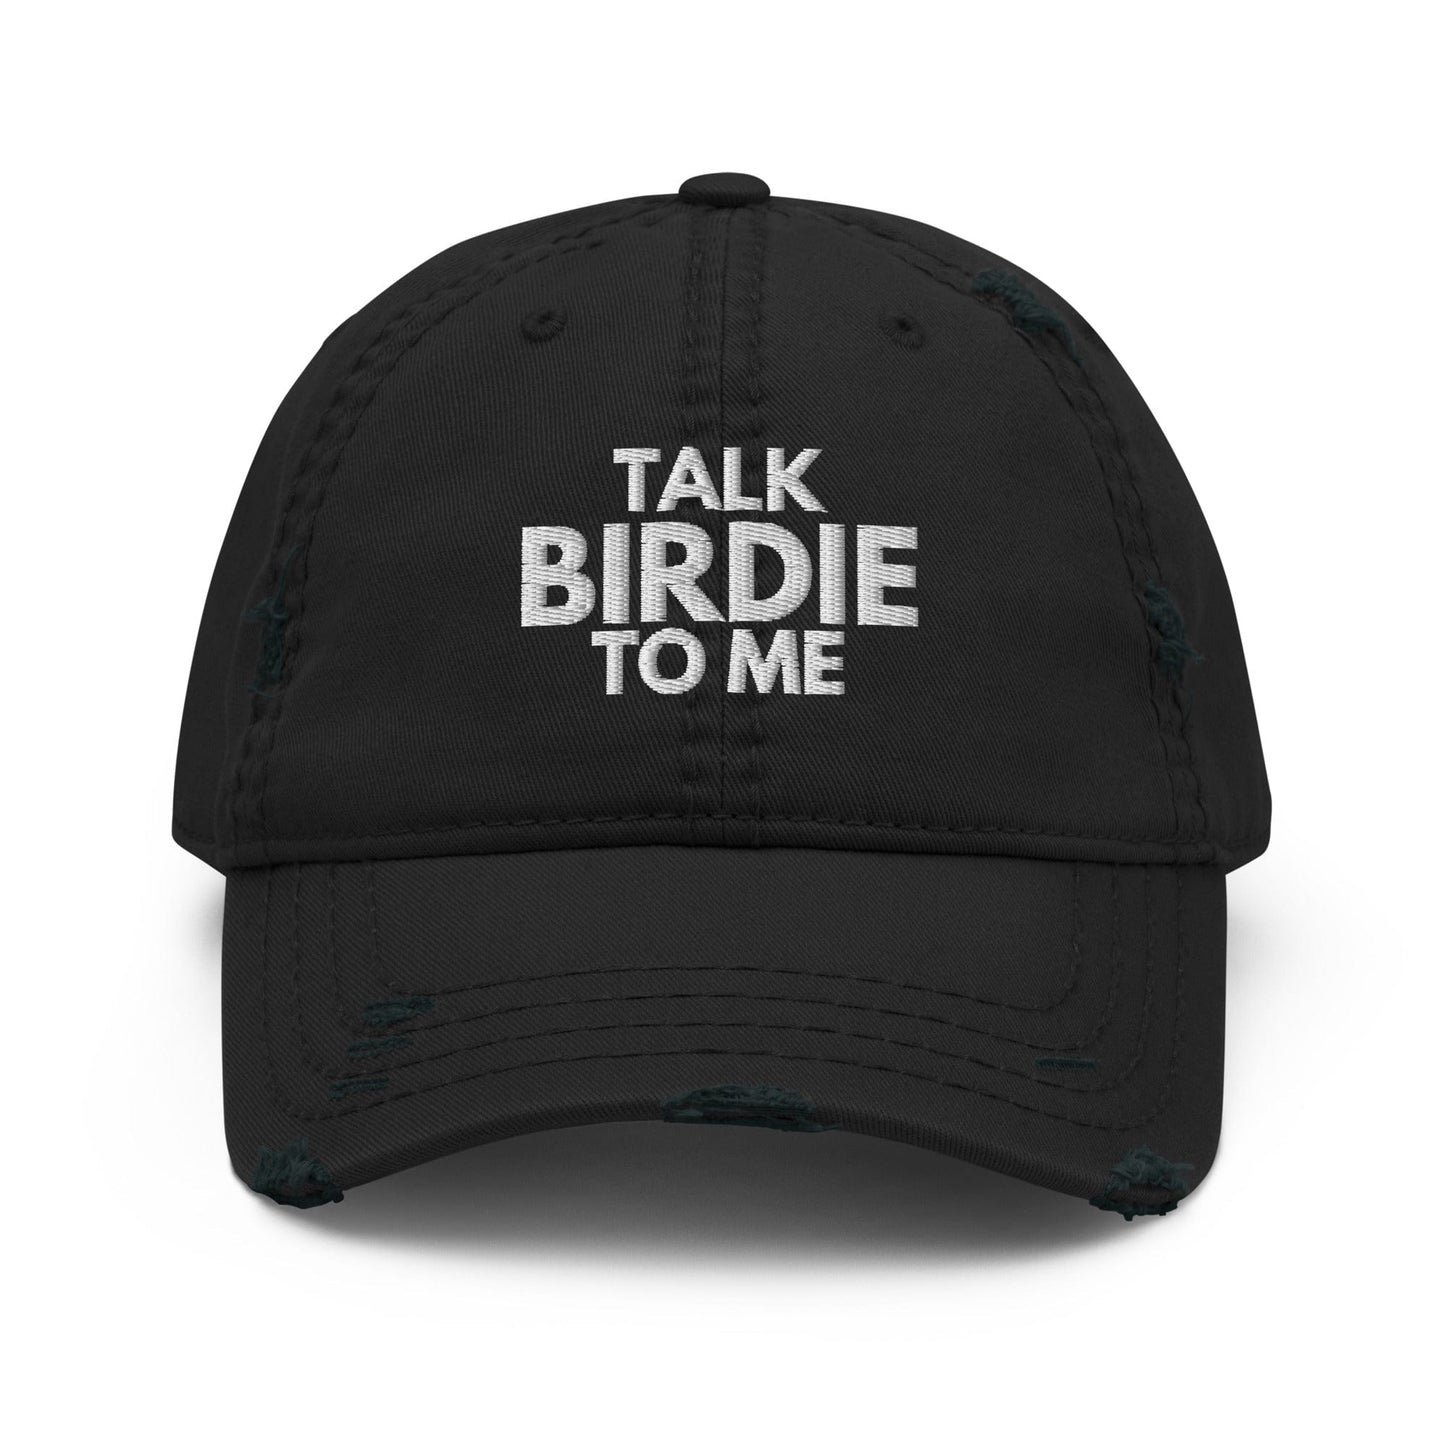 Funny Golfer Gifts  Distressed Cap Black Talk Birdie To Me Hat Distressed Hat